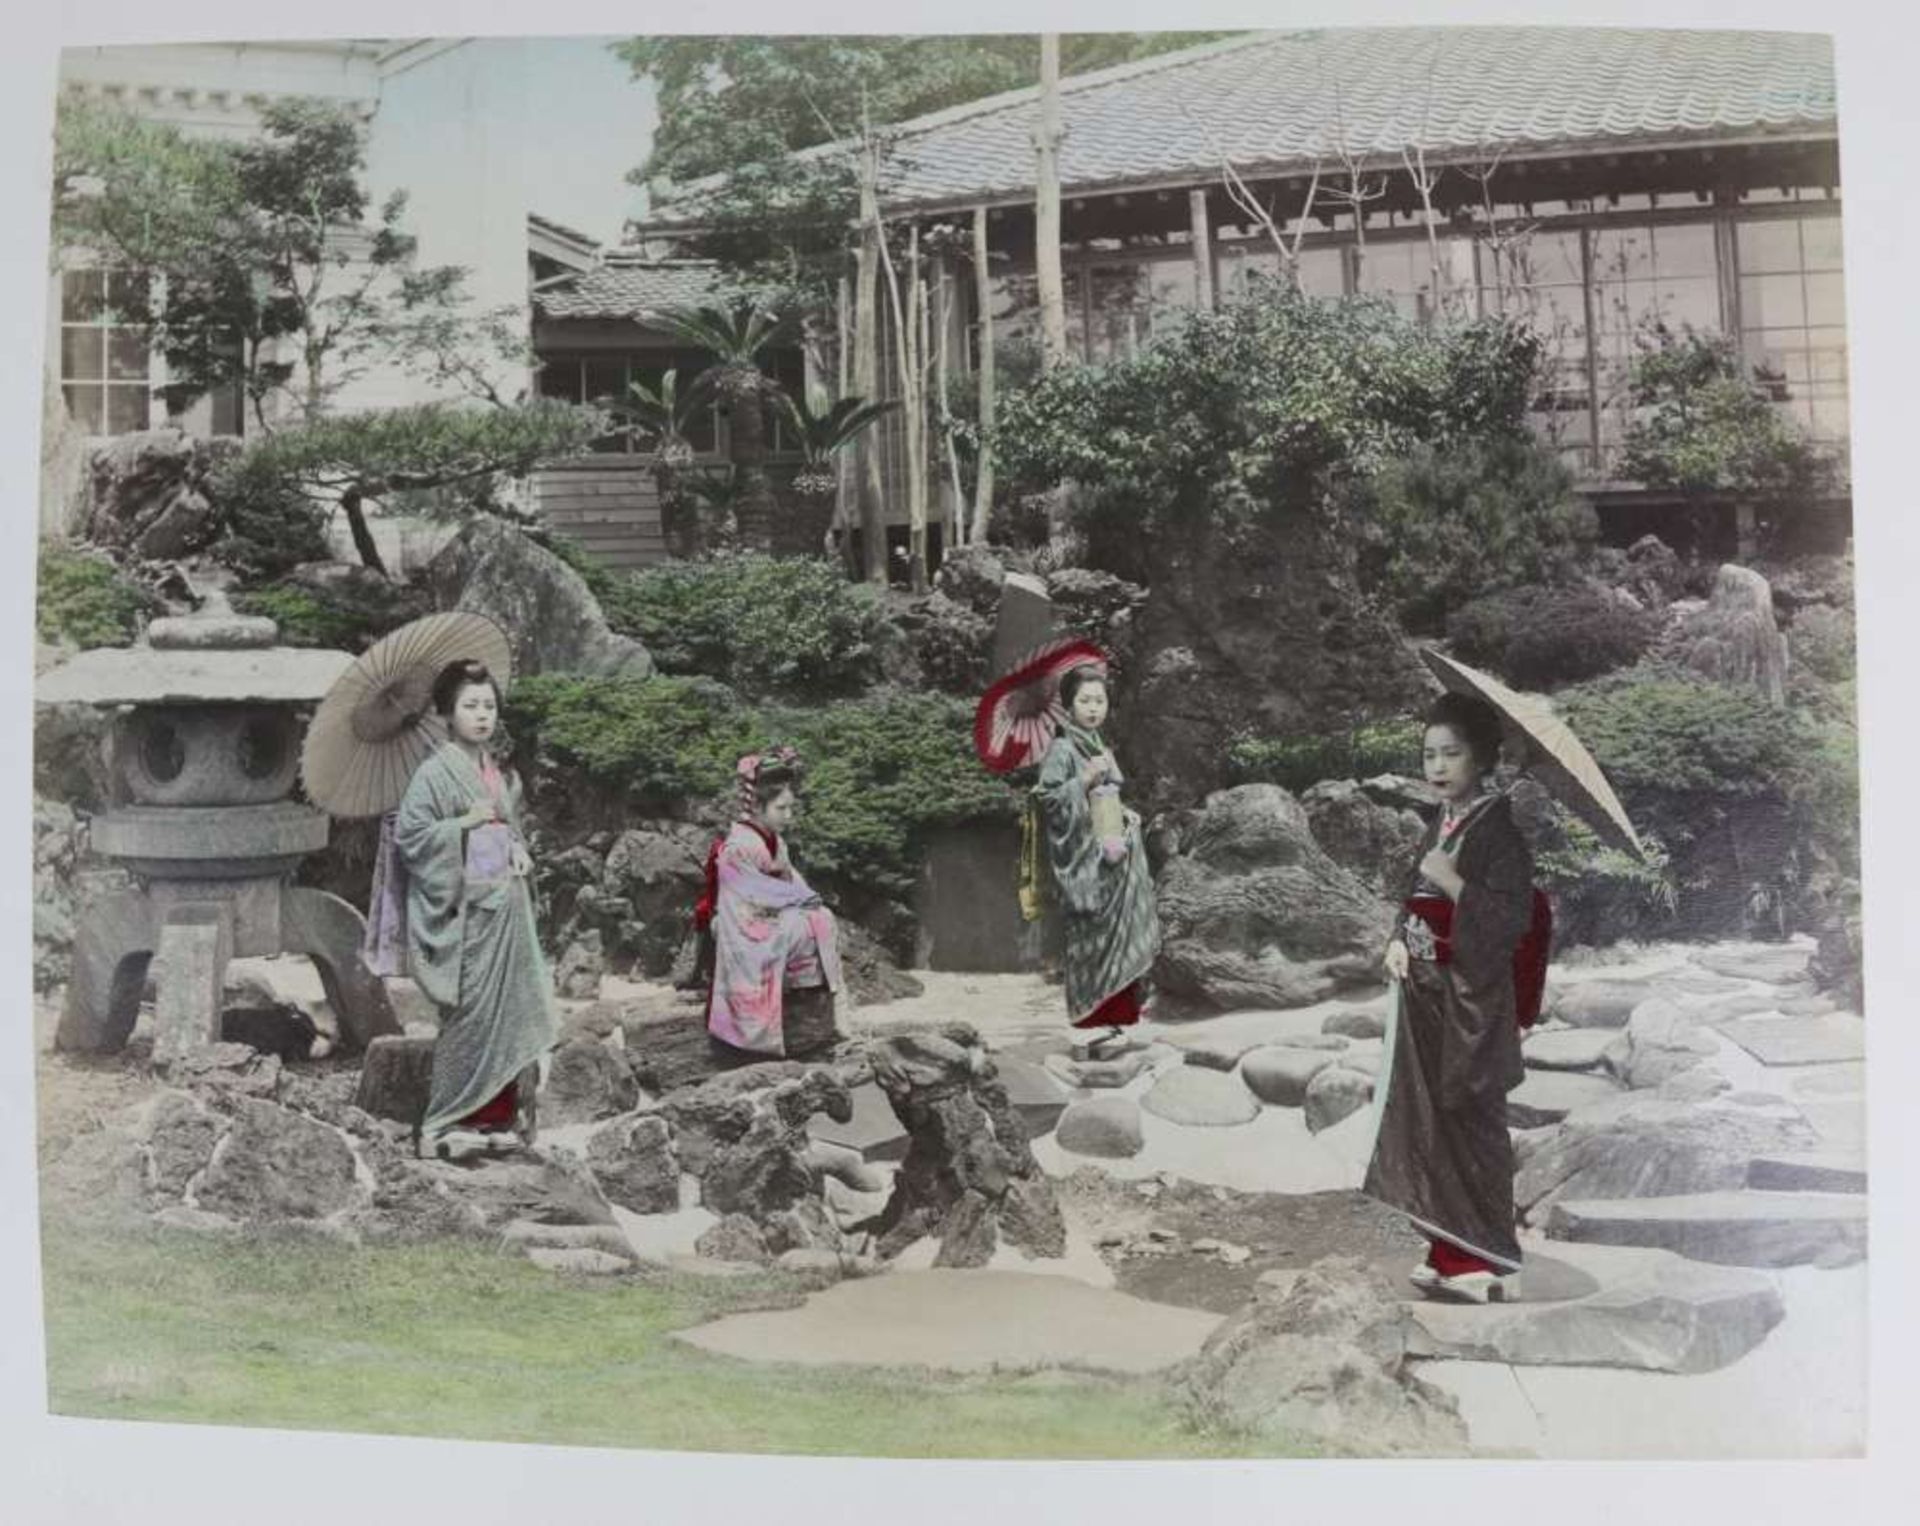 Japan, hervorragendes Fotoalbum, Japan um 1900, 50 handkolorierte Albumin-Abzüge. - Image 7 of 9